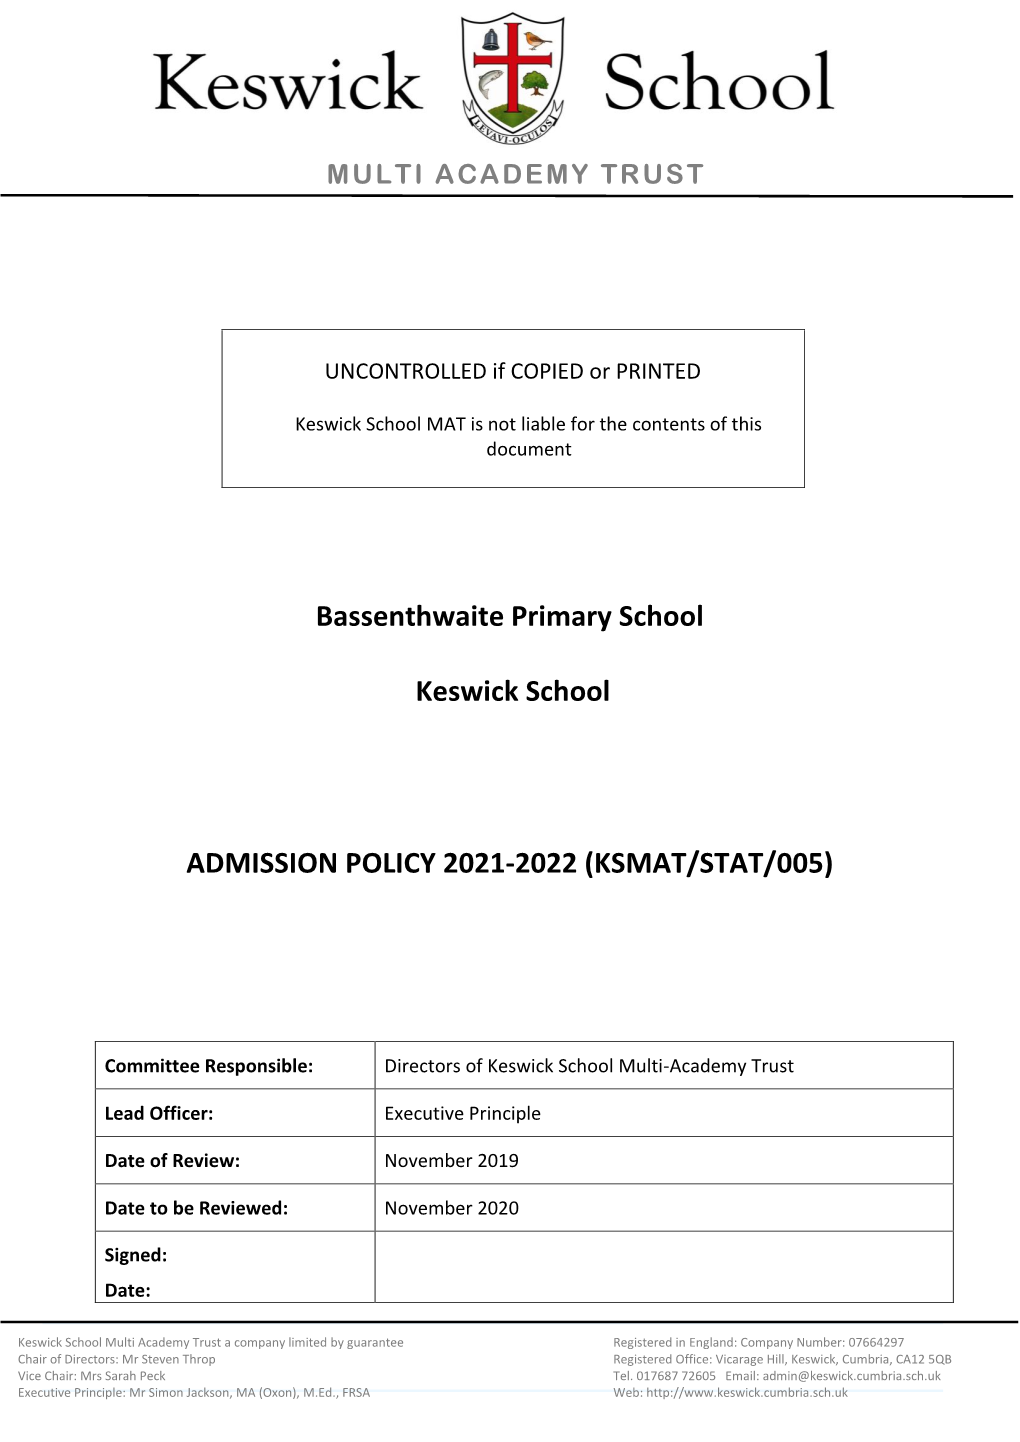 Bassenthwaite Primary School Keswick School ADMISSION